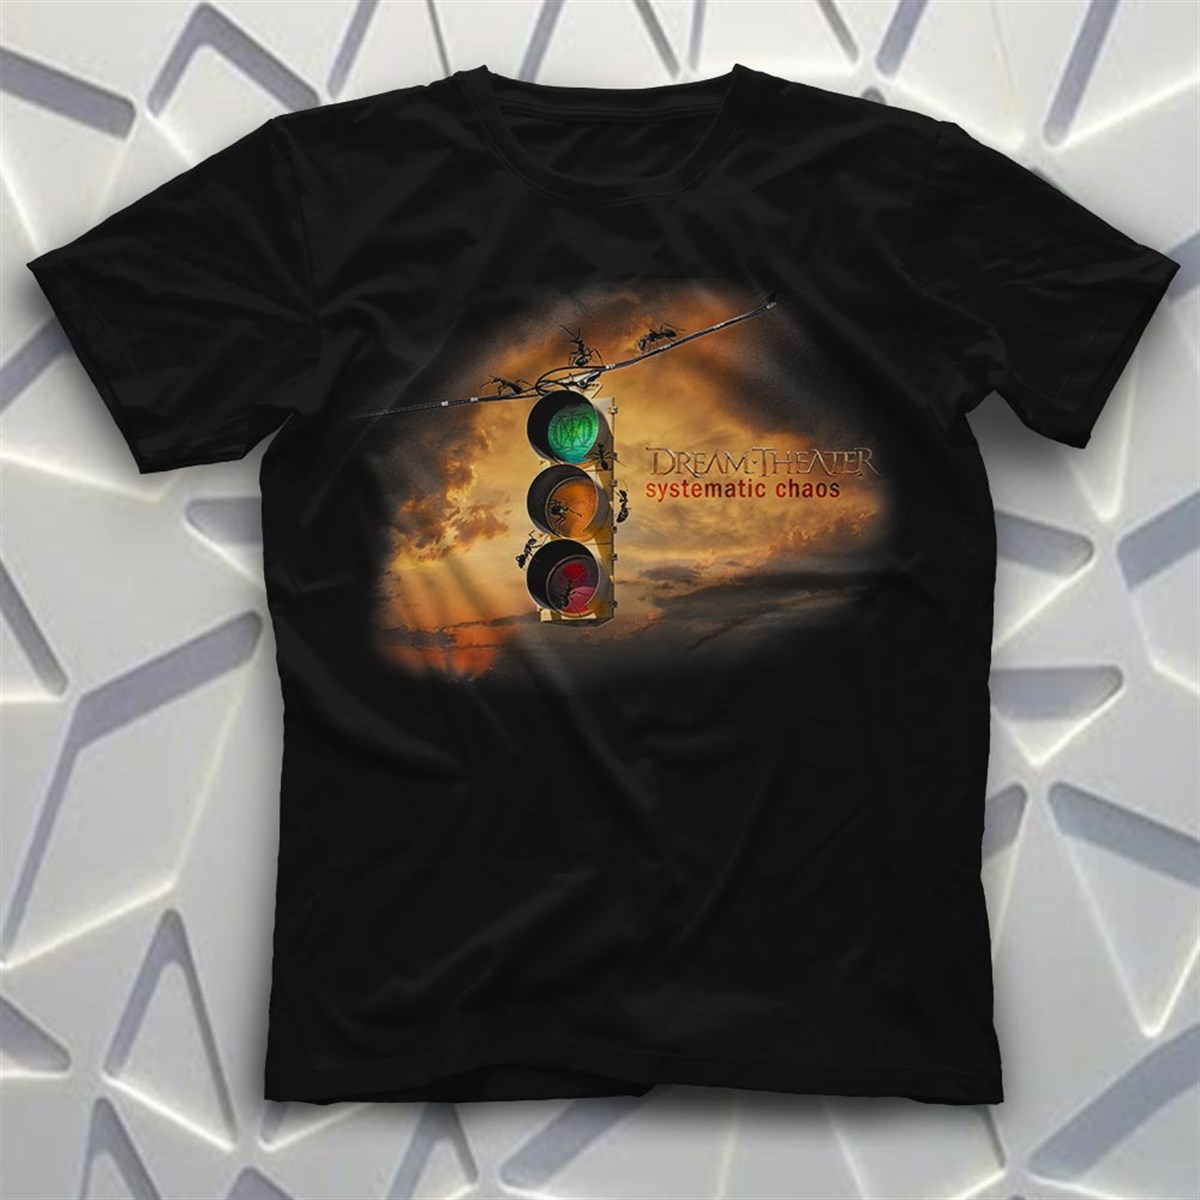 Dream Theater T shirt,Music Band,Unisex Tshirt 06/